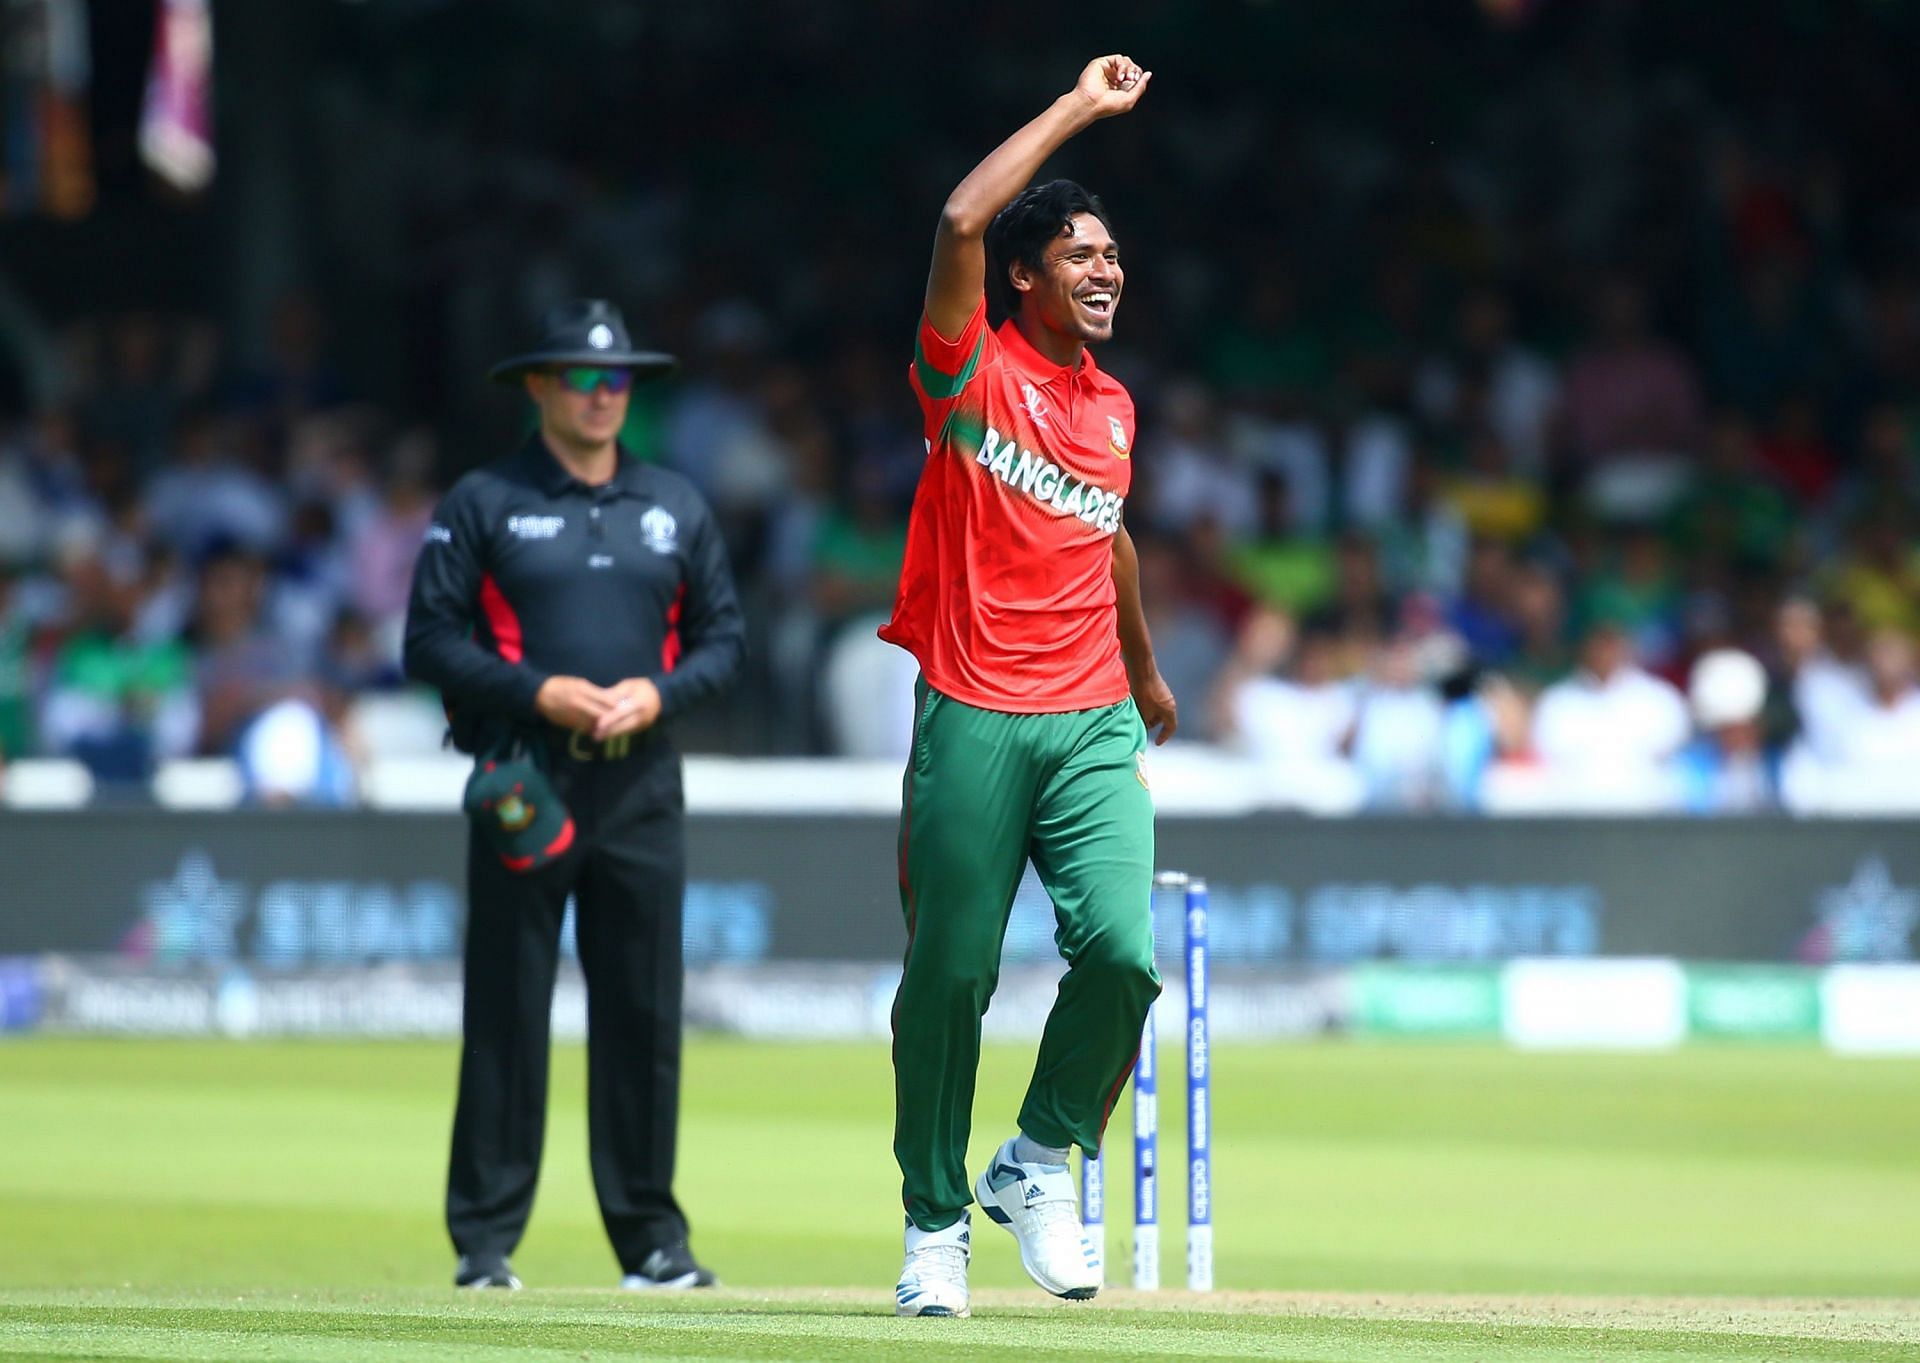 Can Mustafizur Rahman help Bangladesh win their first match in the ICC T20 World Cup 2021?